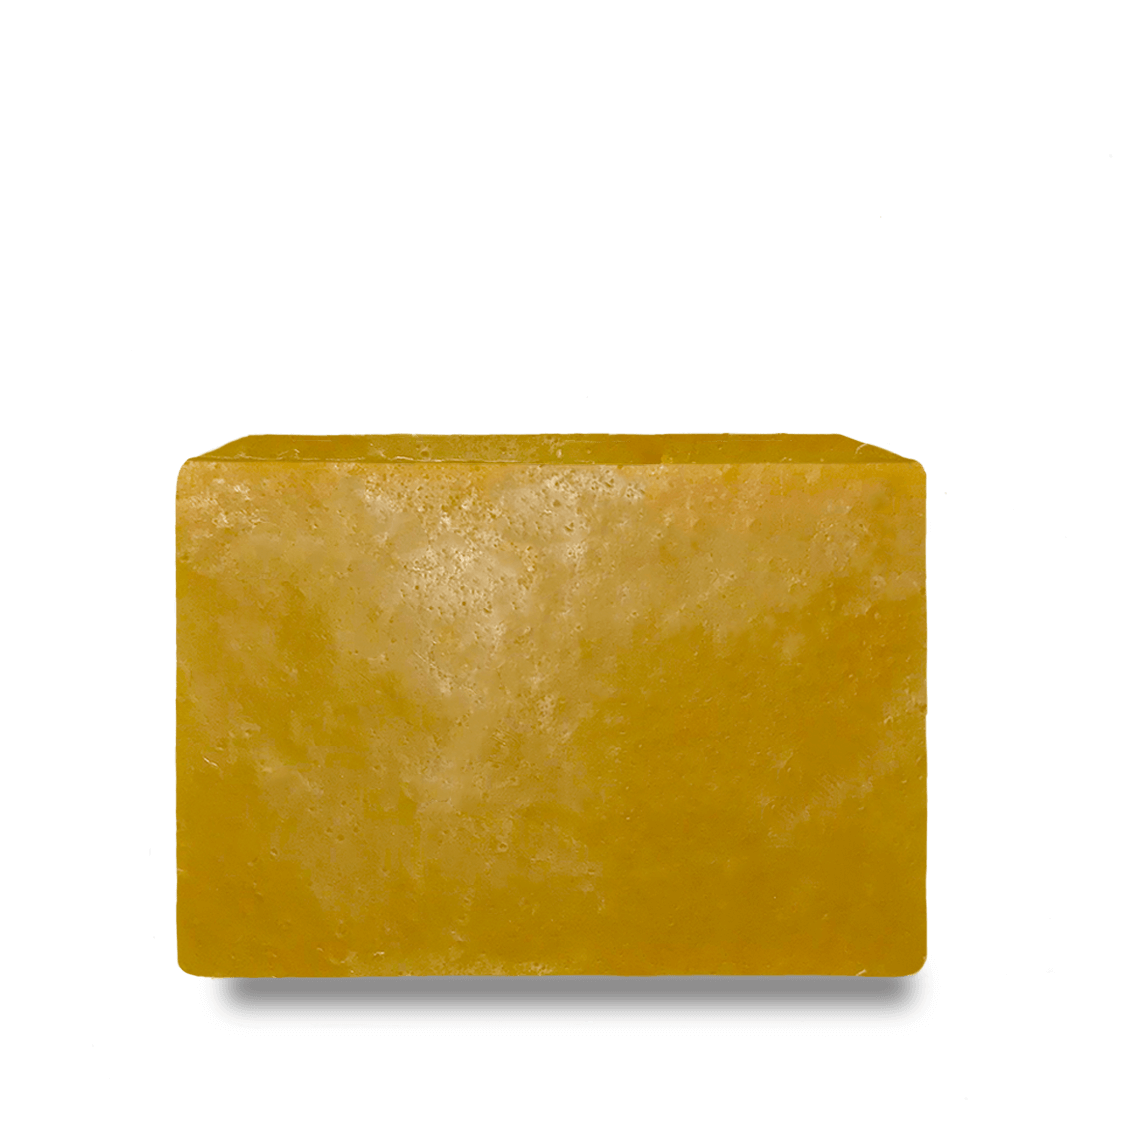 Raw Honey & Parsley Soap Bar - Radiant Crush